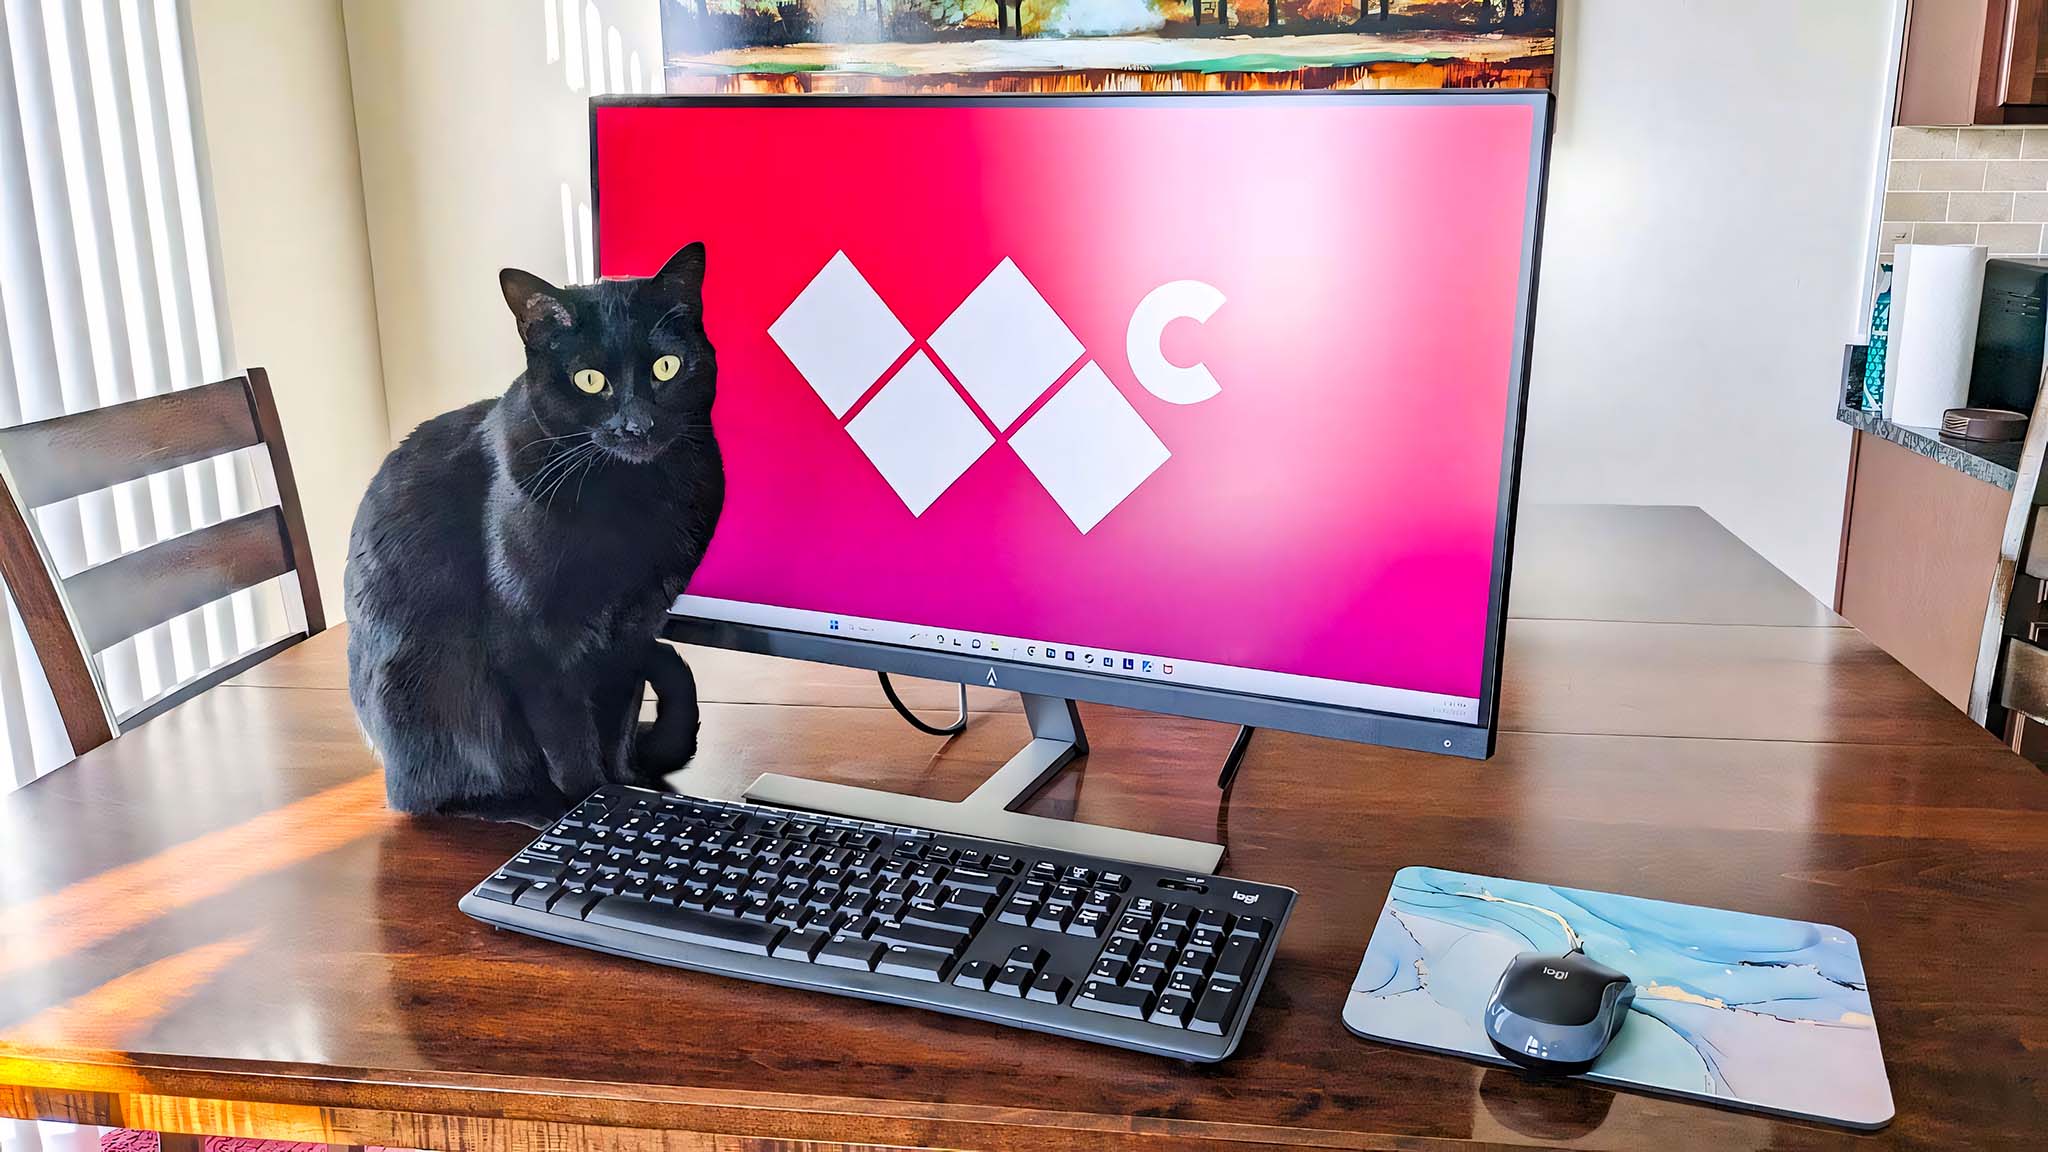 Monoprice Dark Matter 27-inch gaming monitor with cat